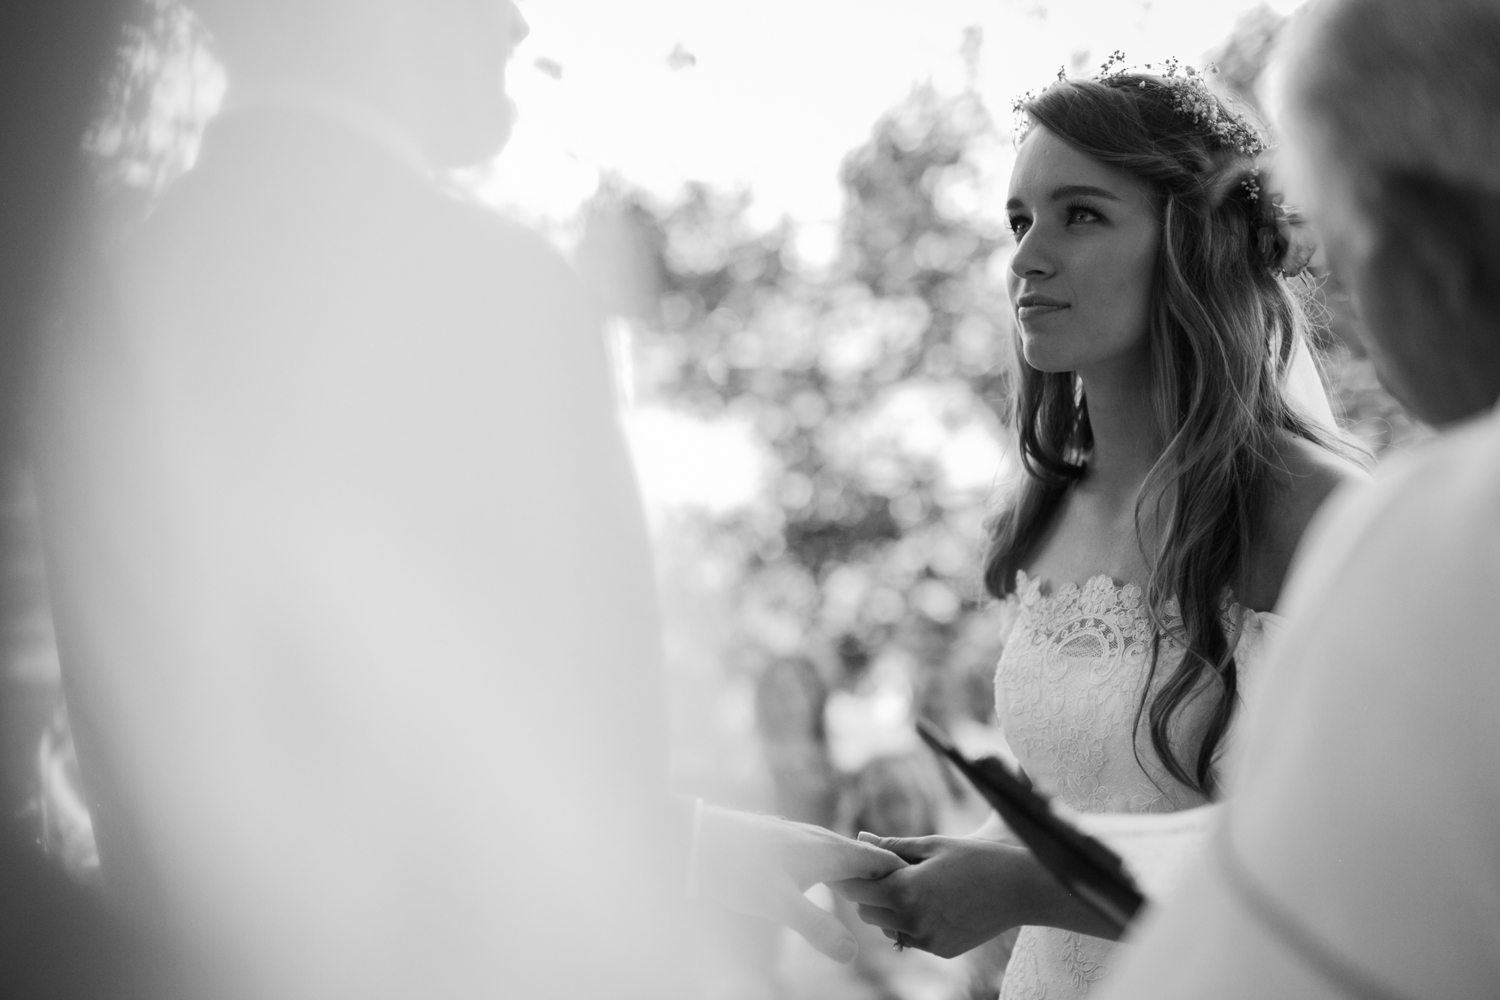 Napa Valley Vacaville Wedding Photographer - Hannah & Stephen - The Gathering Season x weareleoandkat 052.jpg